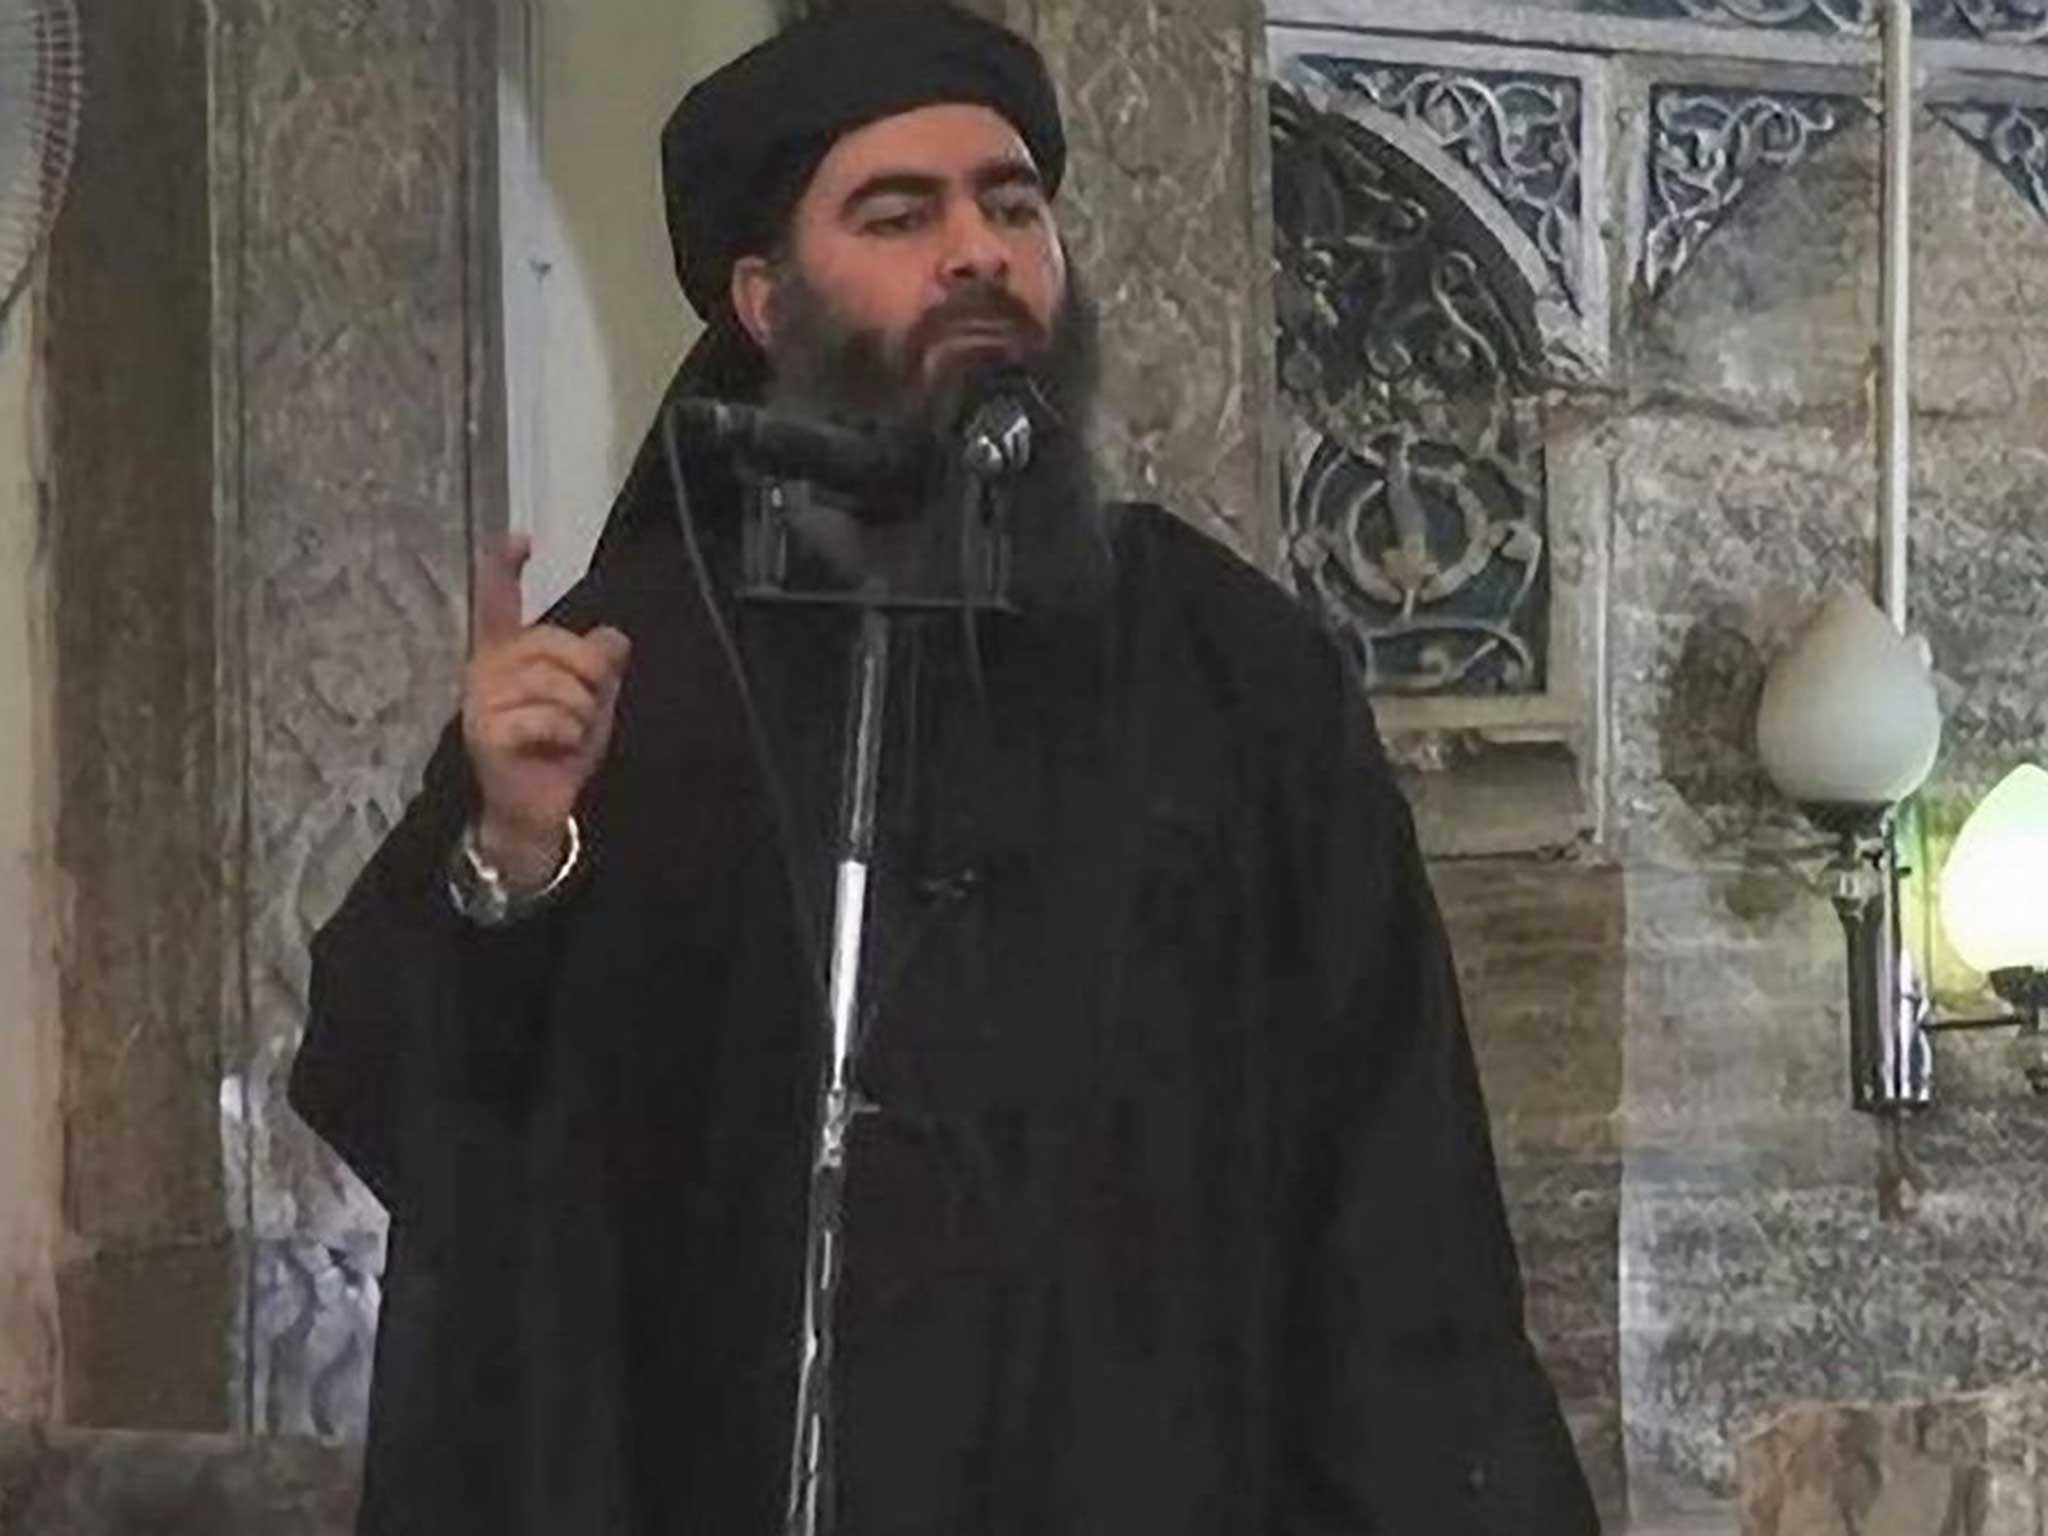 Abu Bakr al-Baghdadi has appointed himself caliph of the self-proclaimed "Islamic State"